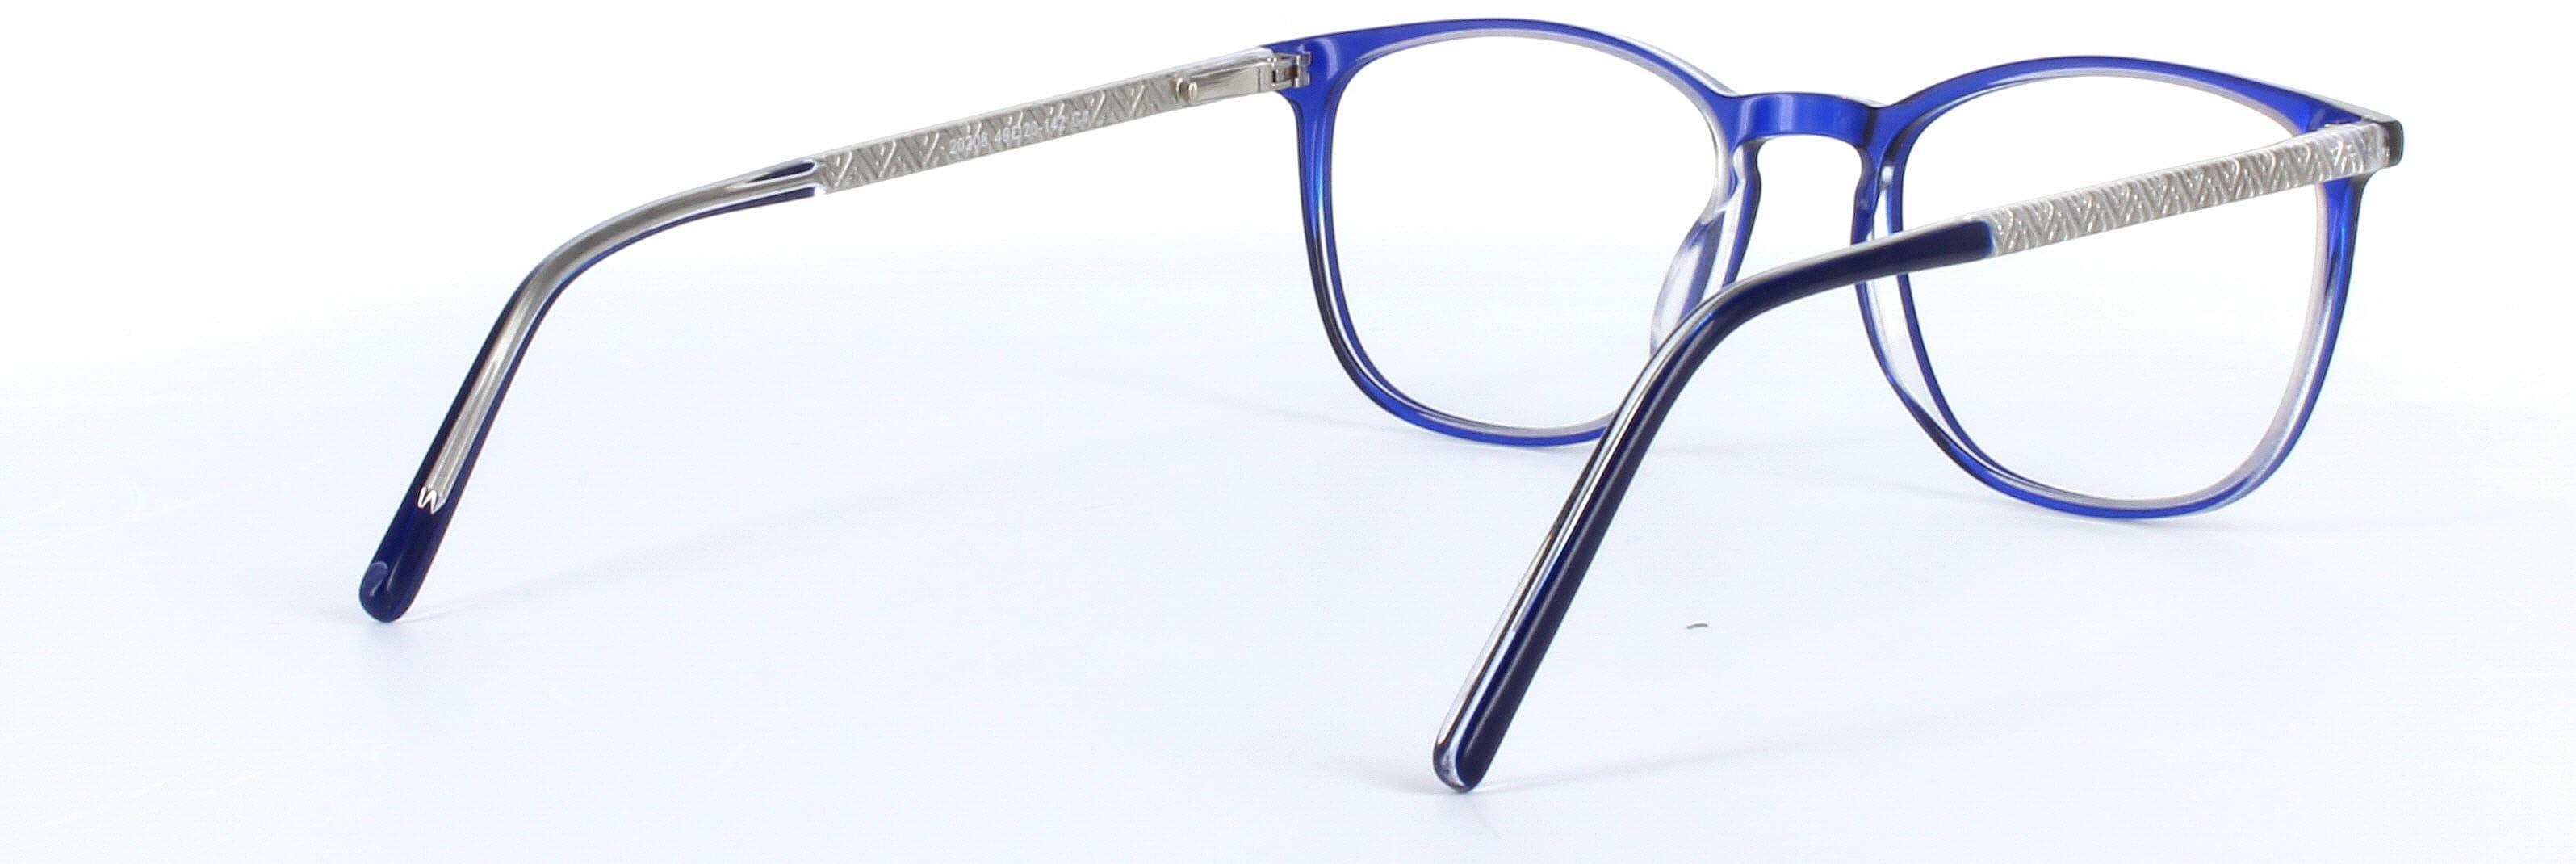 Mariana Blue Full Rim Round Plastic Glasses - Image View 4